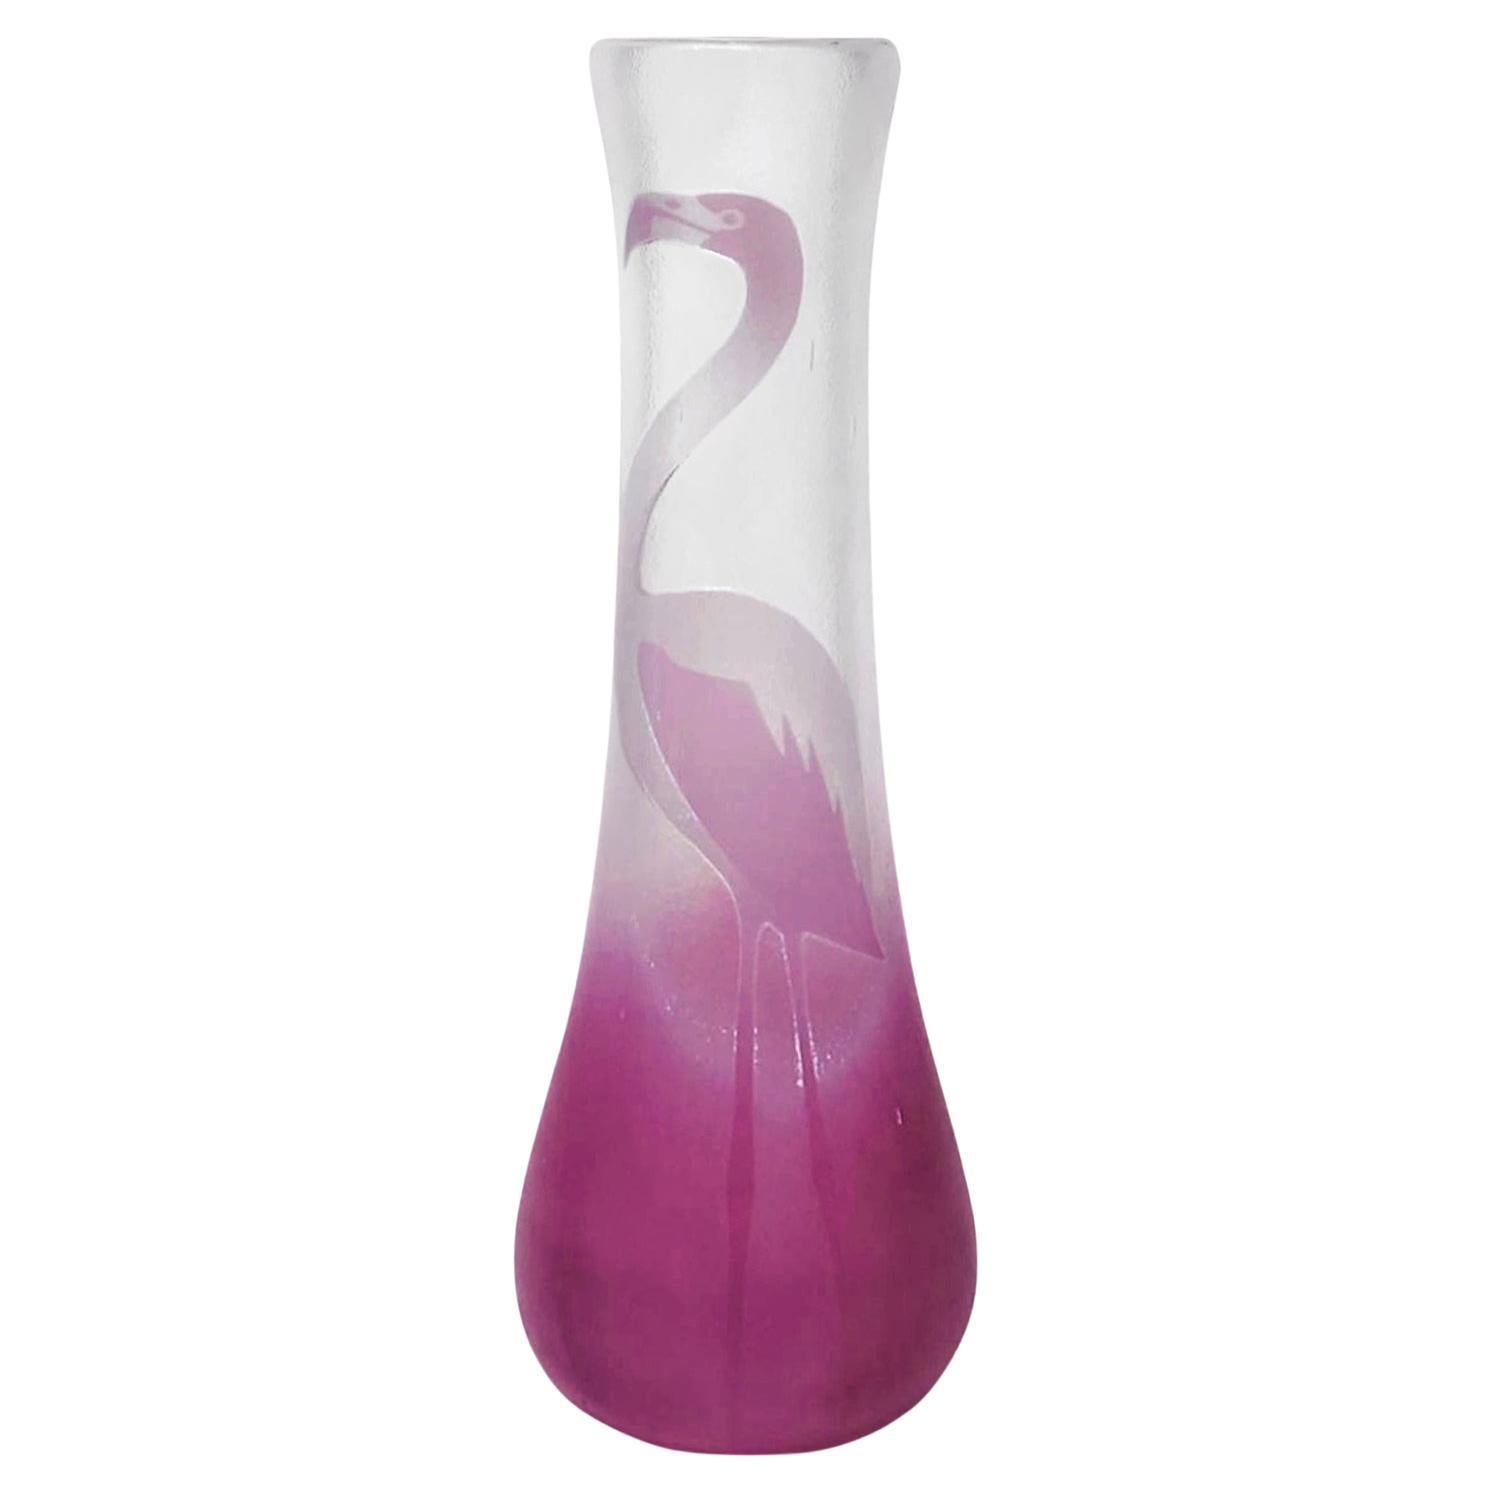 Paul Hoff Pink Flamingo Glass vase - FREE SHIPPING